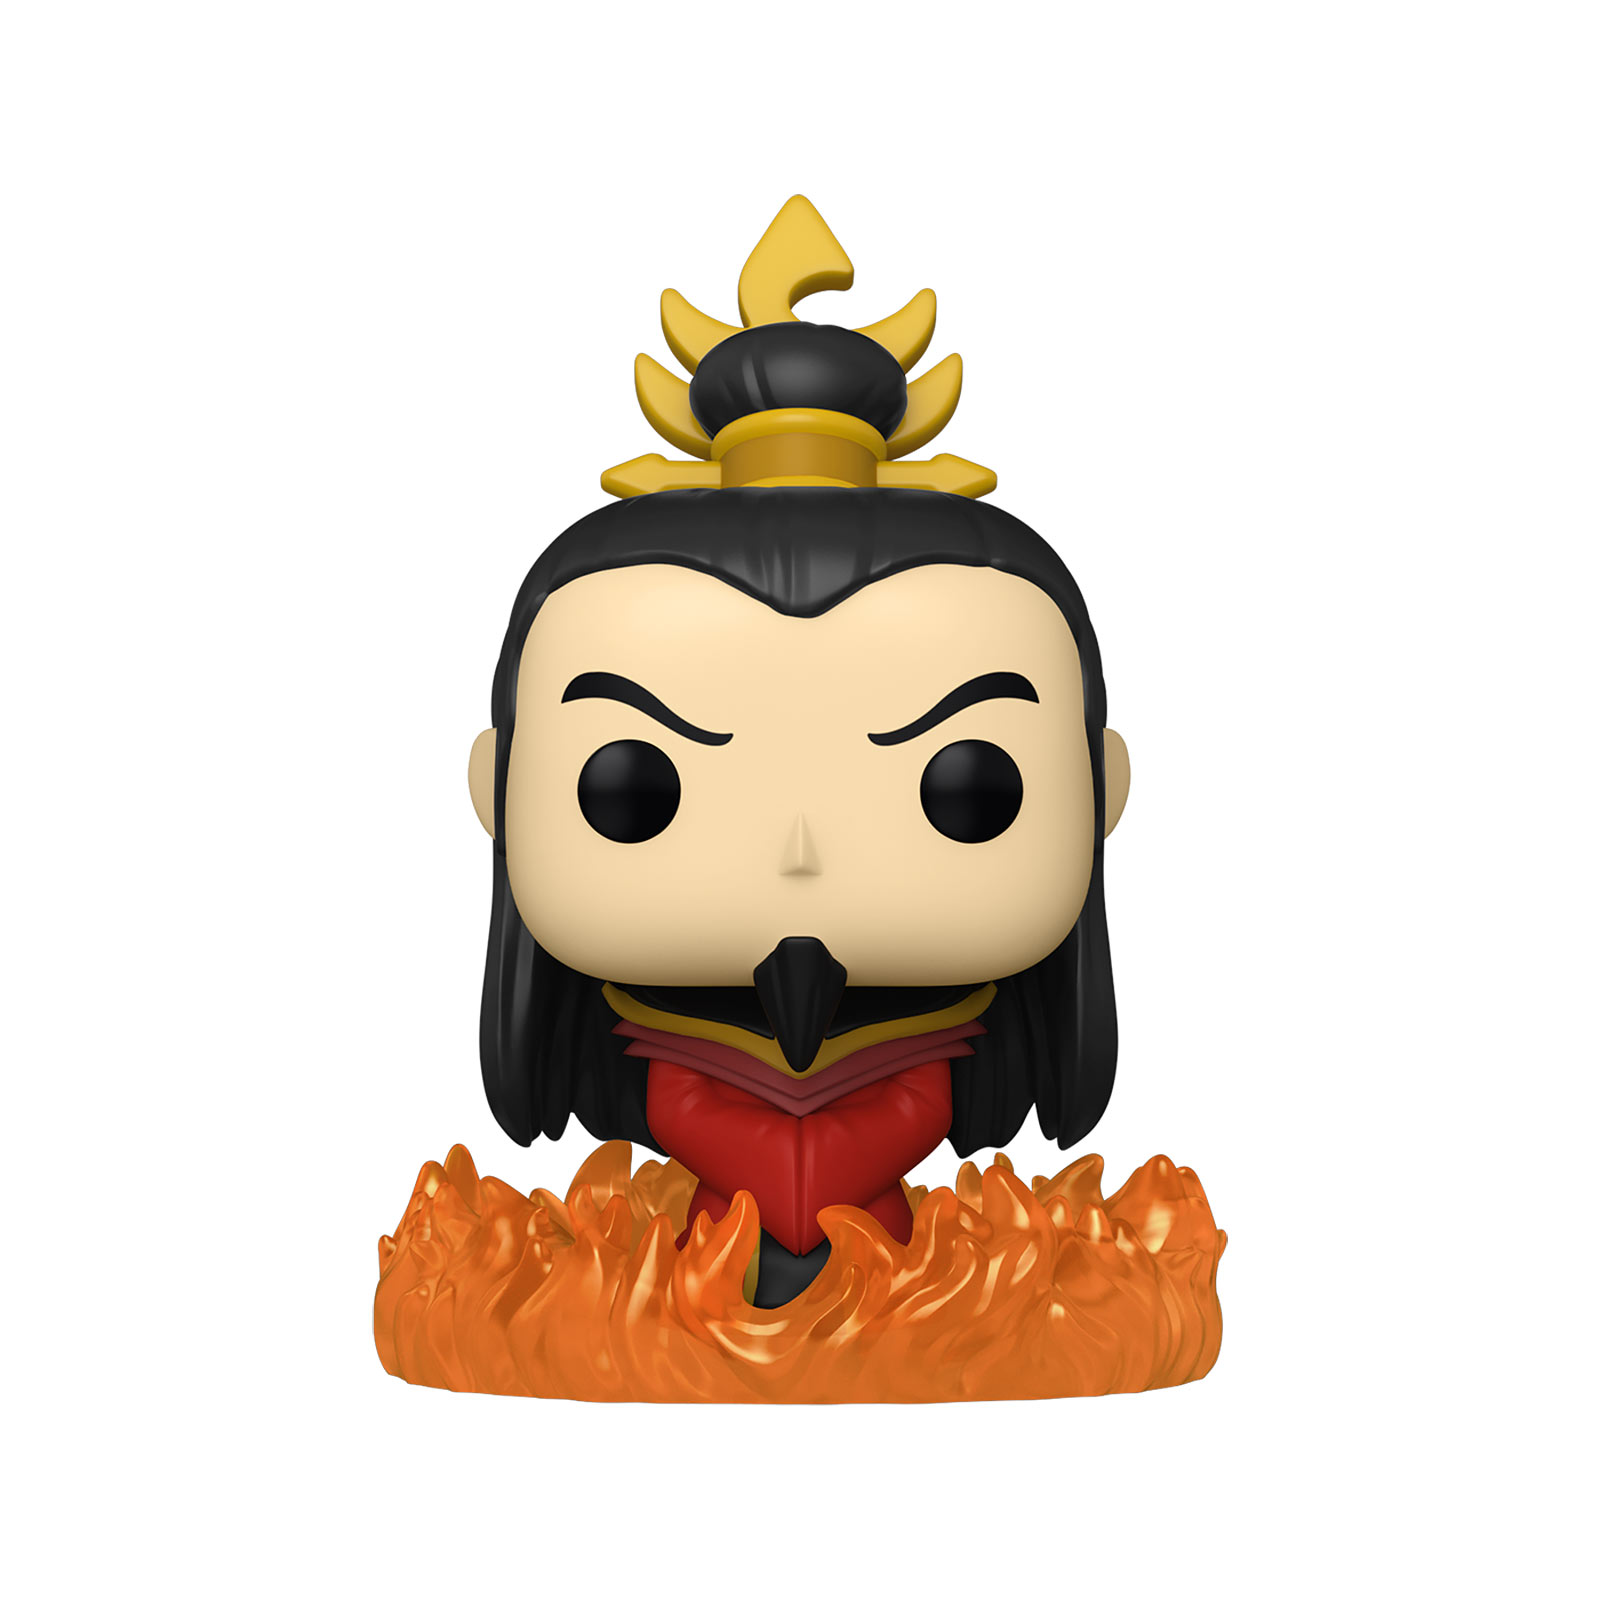 Avatar - Fire Lord Ozai Funko Pop Figur